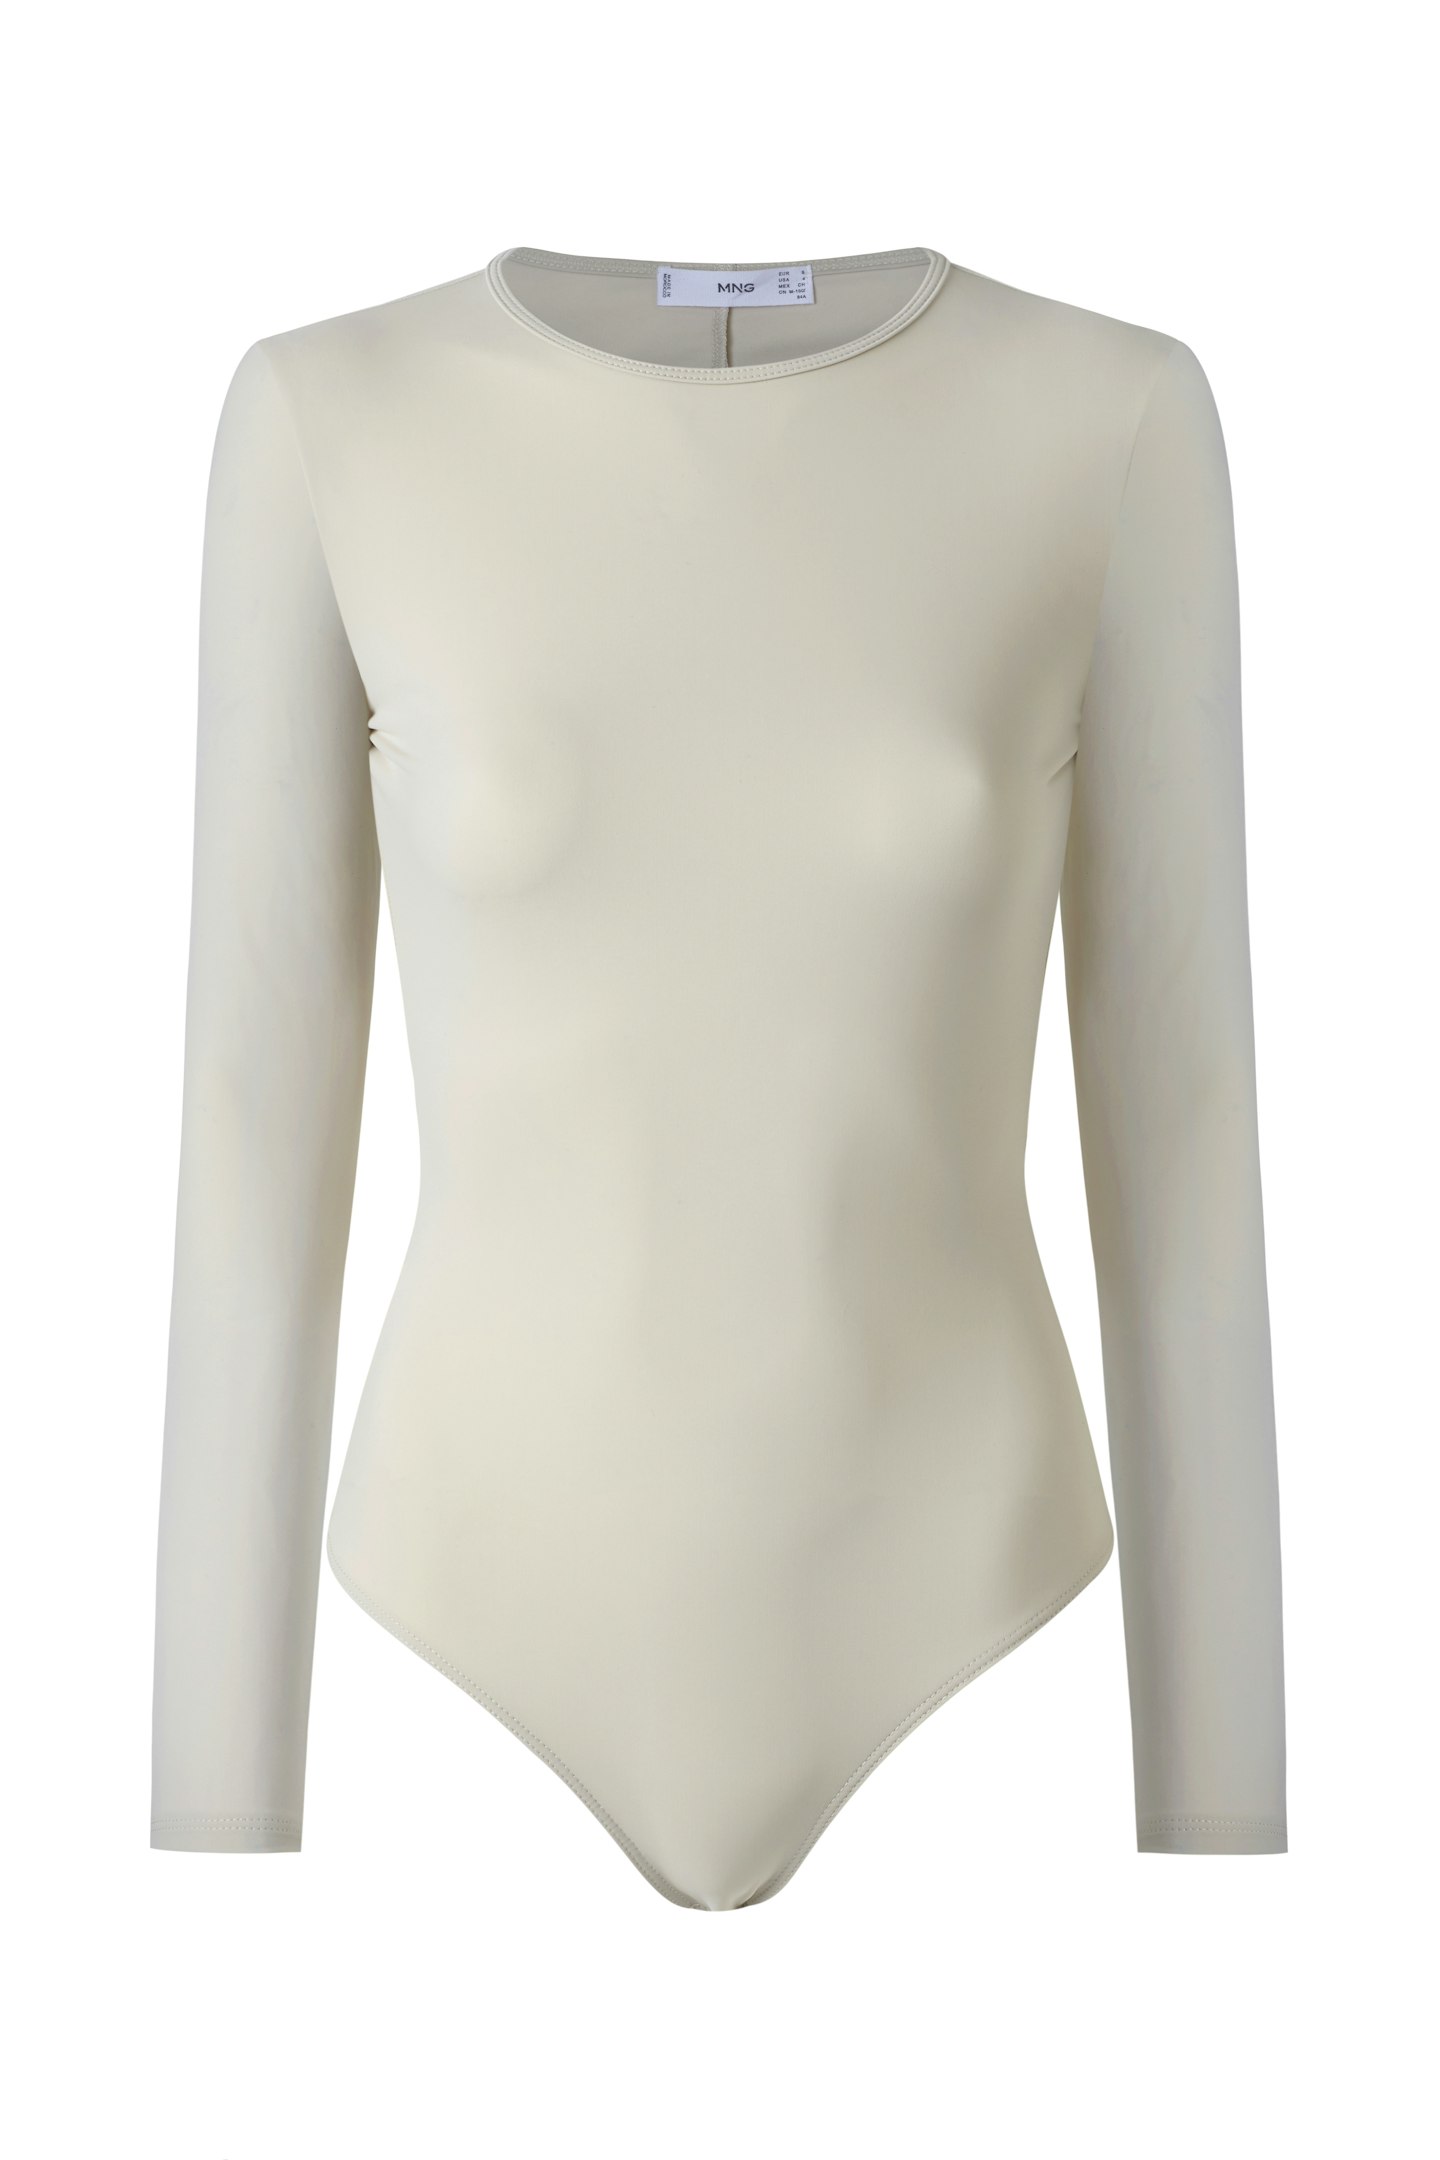 Pernille Teisbaek x Mango, Cut-Out White Bodysuit, £29.99